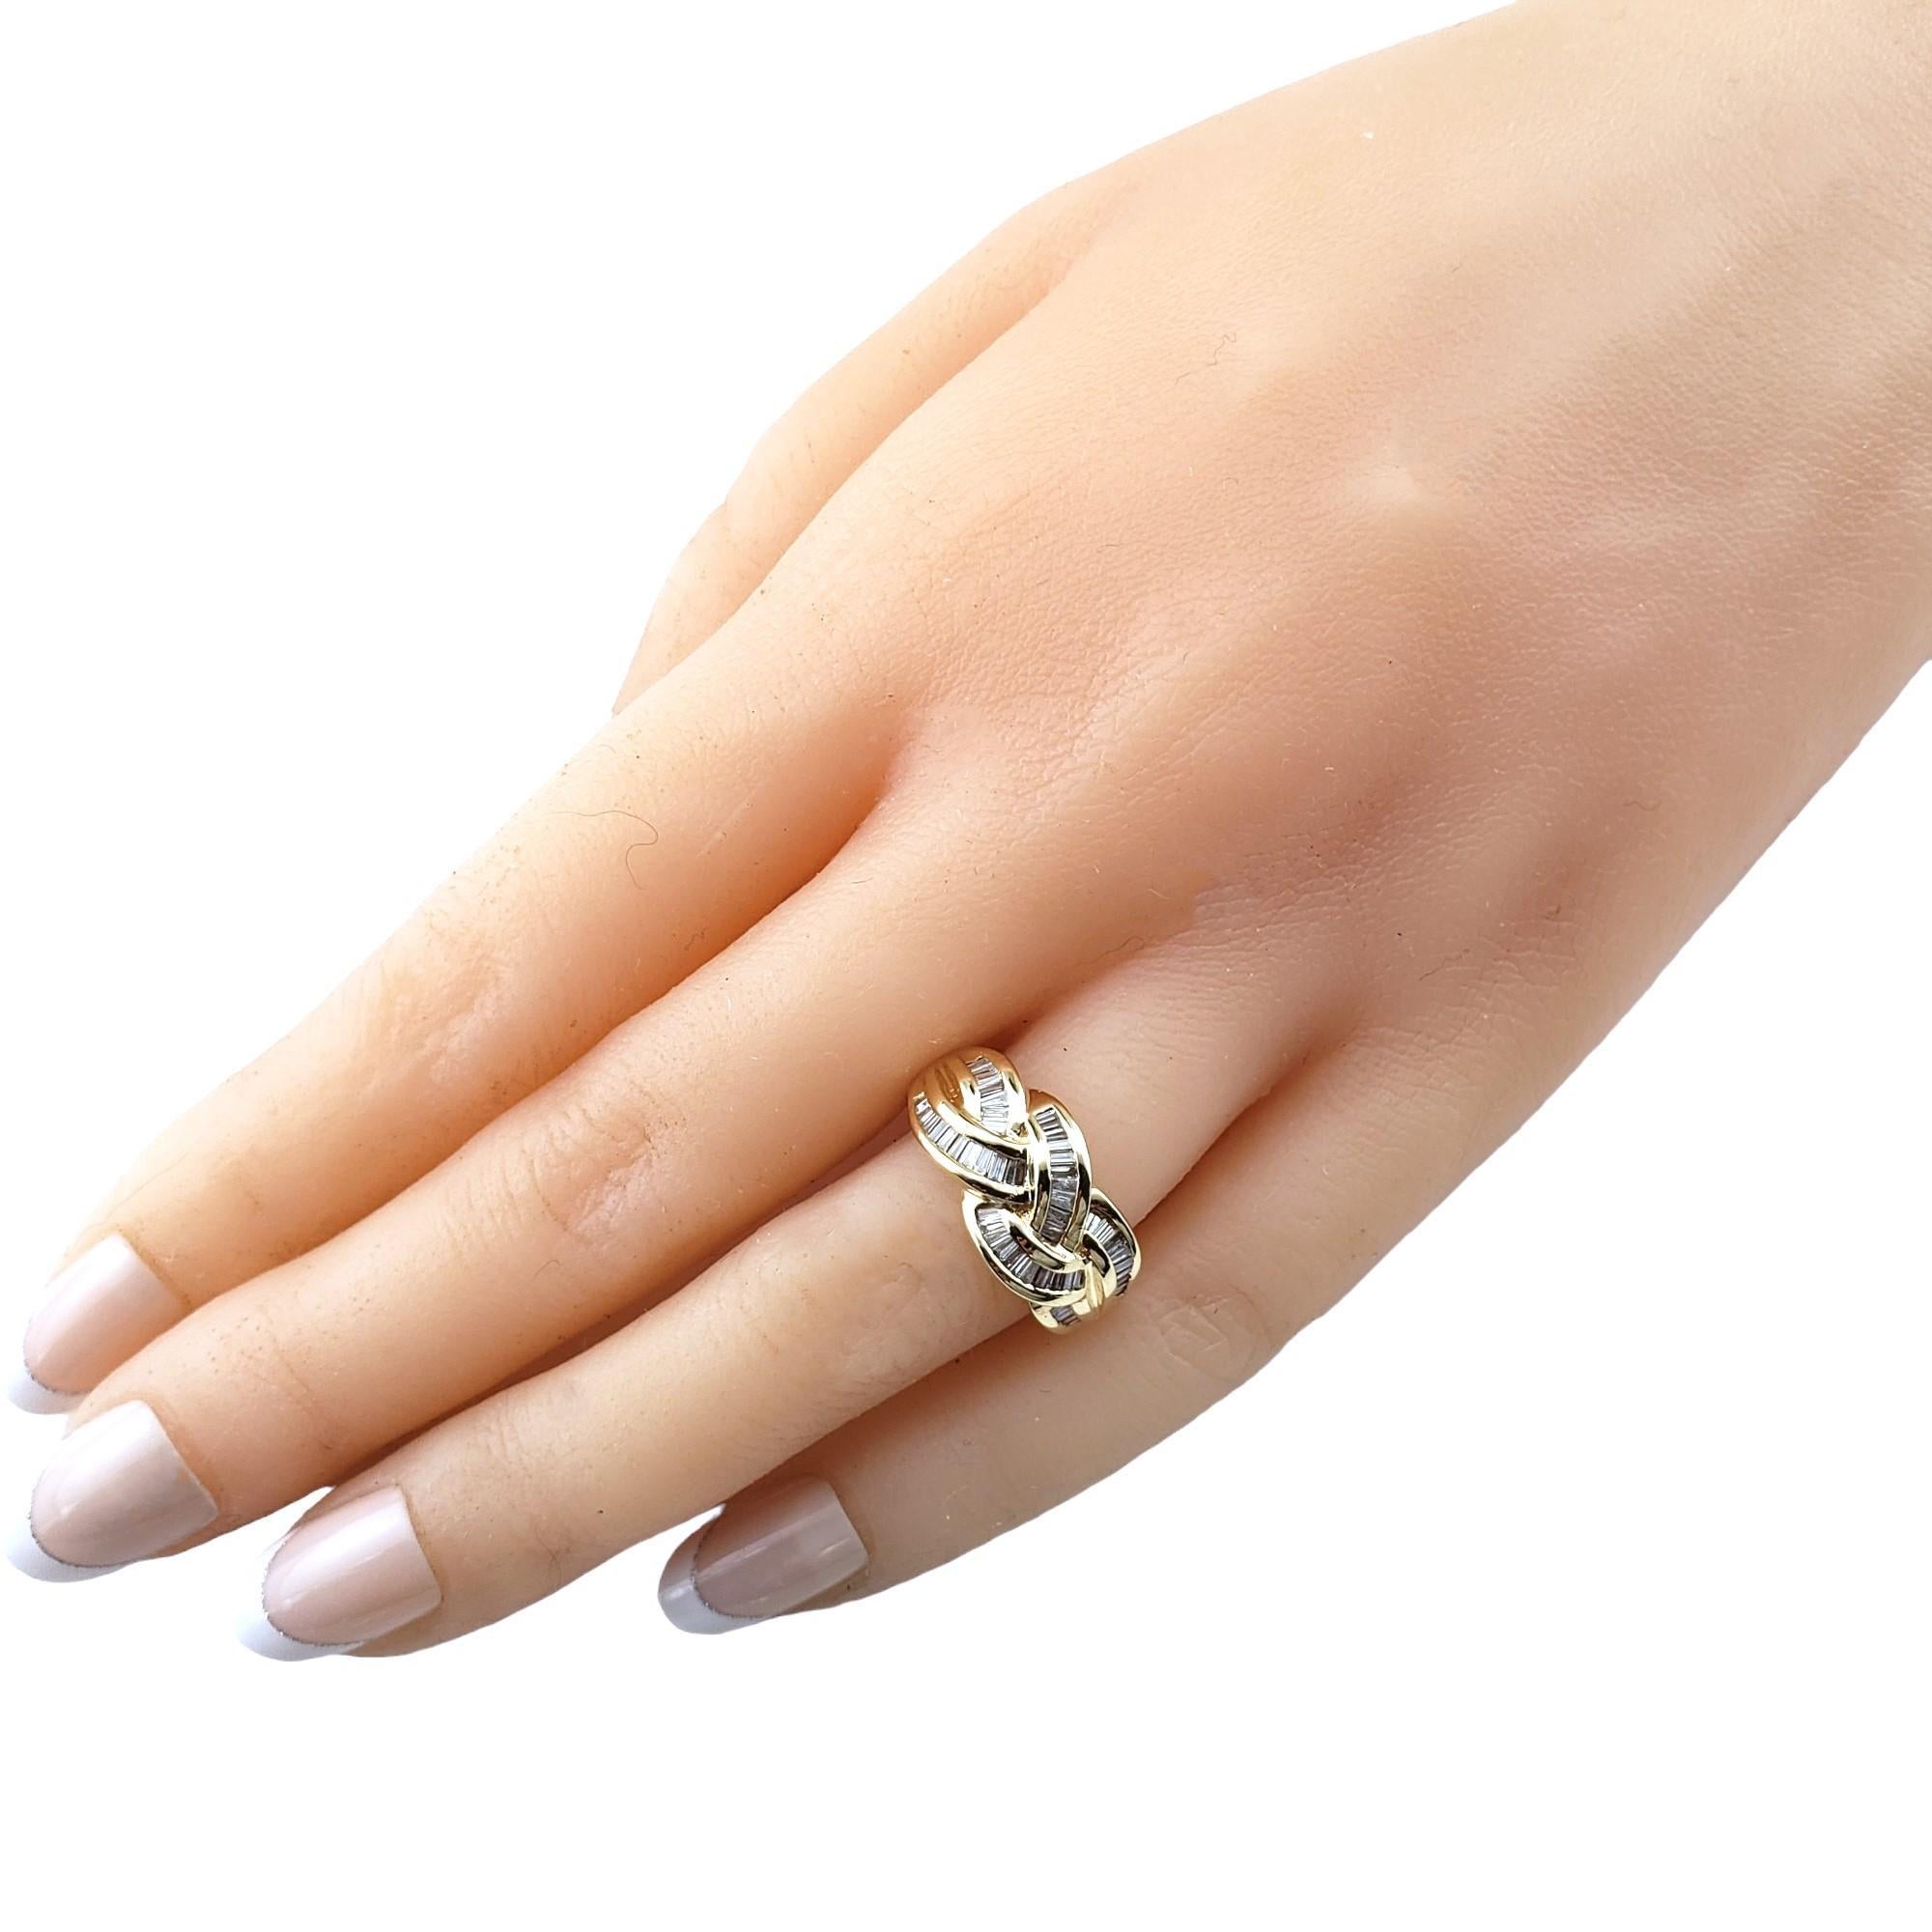  14 Karat Yellow Gold Diamond Ring Size 5.5 #15378 For Sale 1